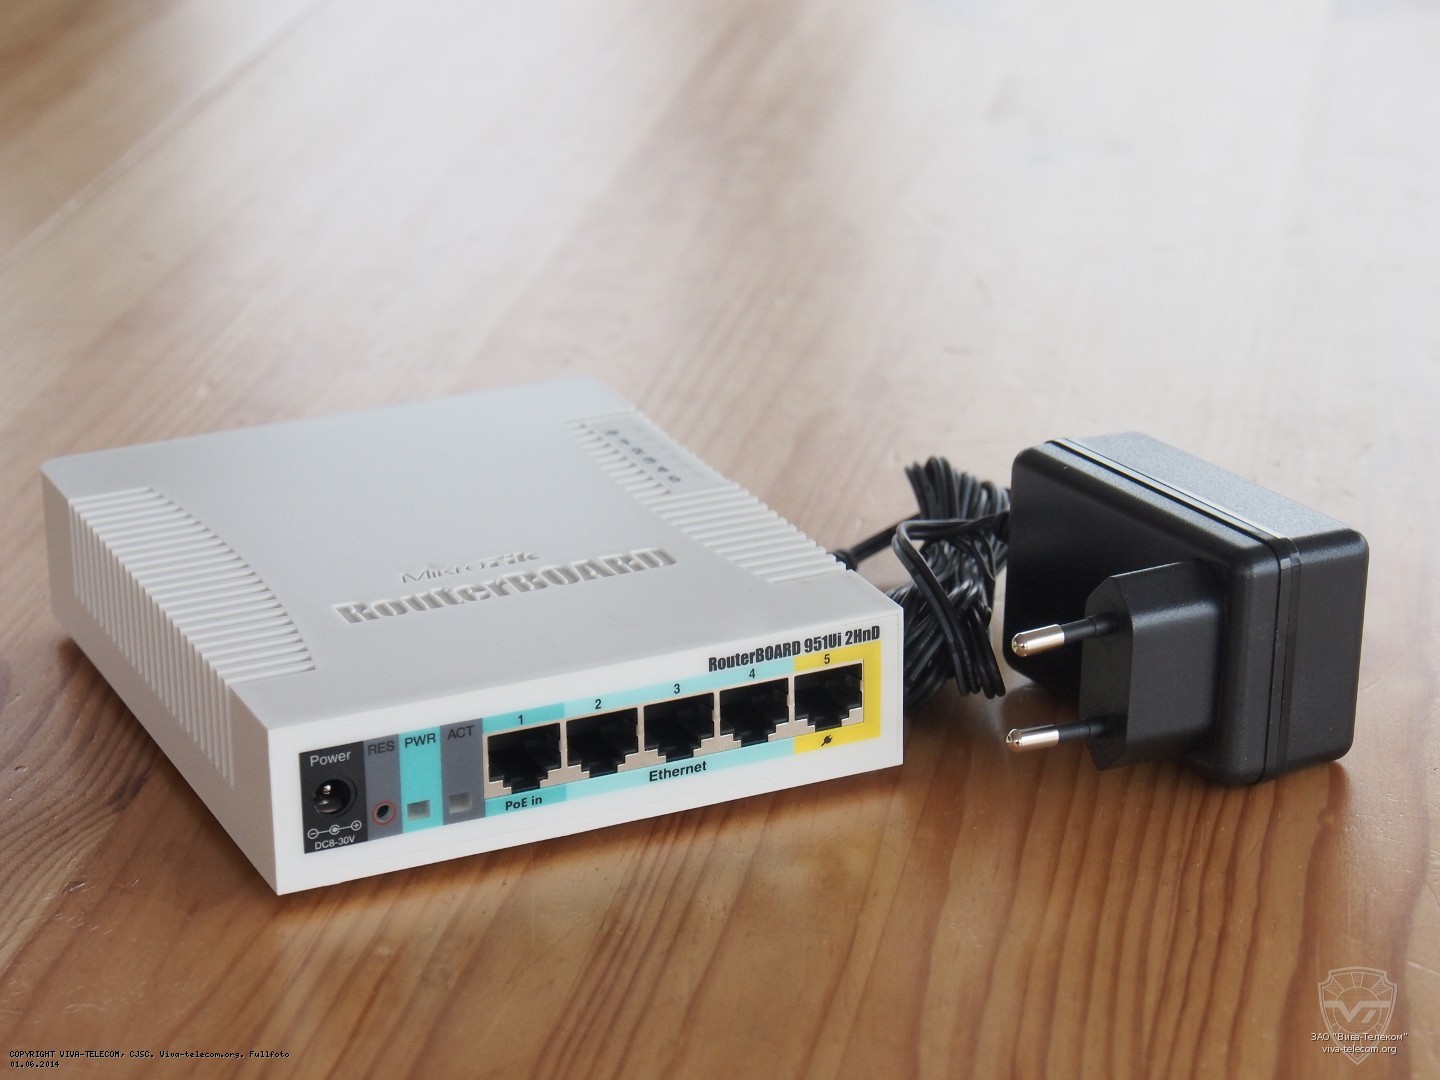   Mikrotik RouterBOARD RB951Ui-2HnD